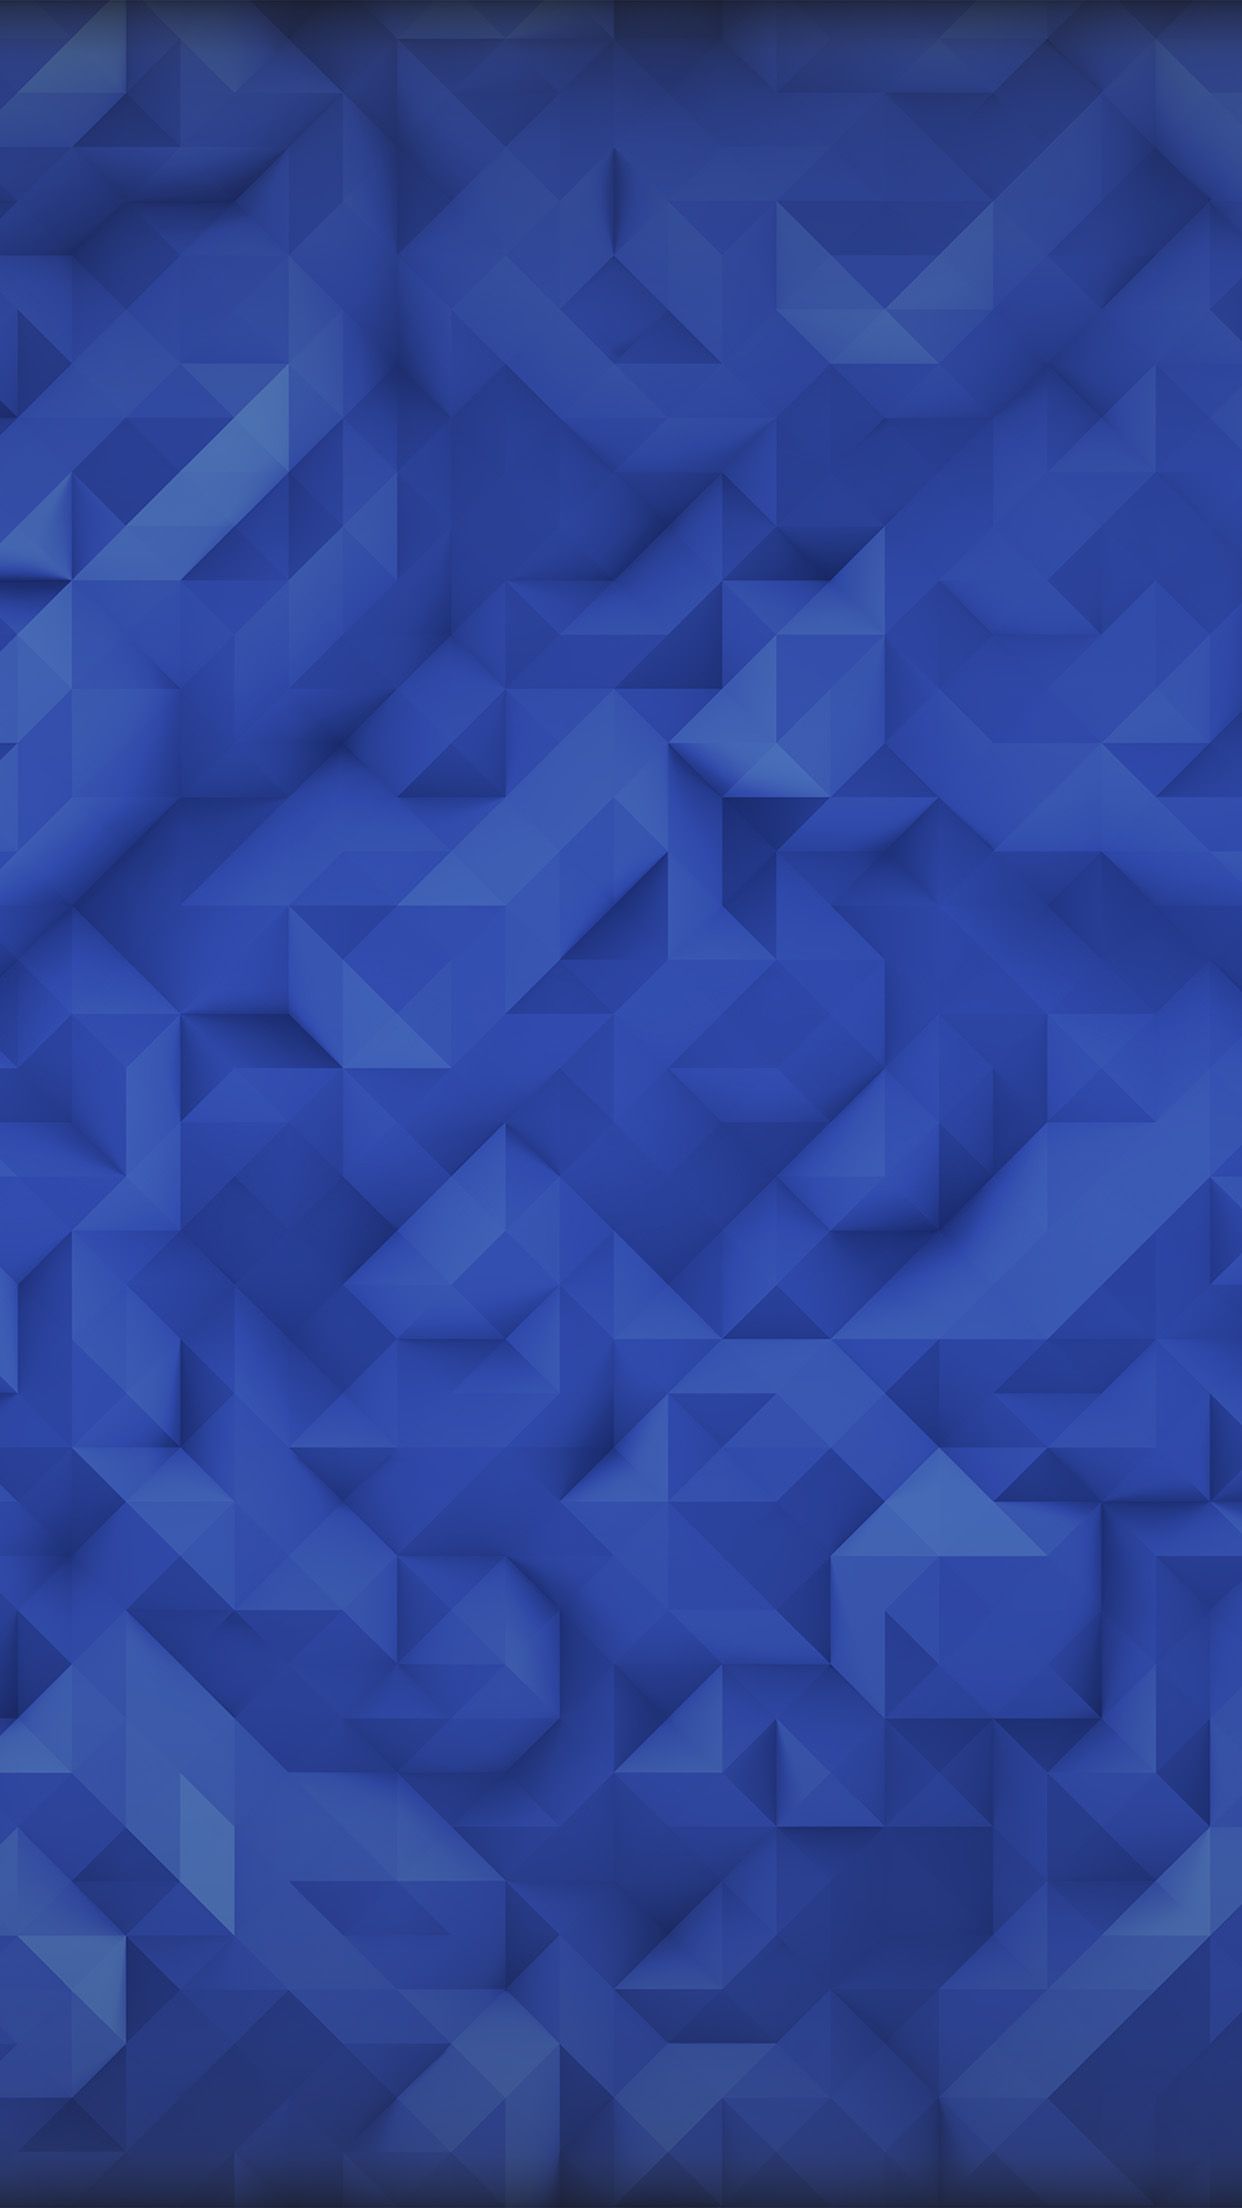 Polygon Art Blue Triangle Pattern Wallpaper